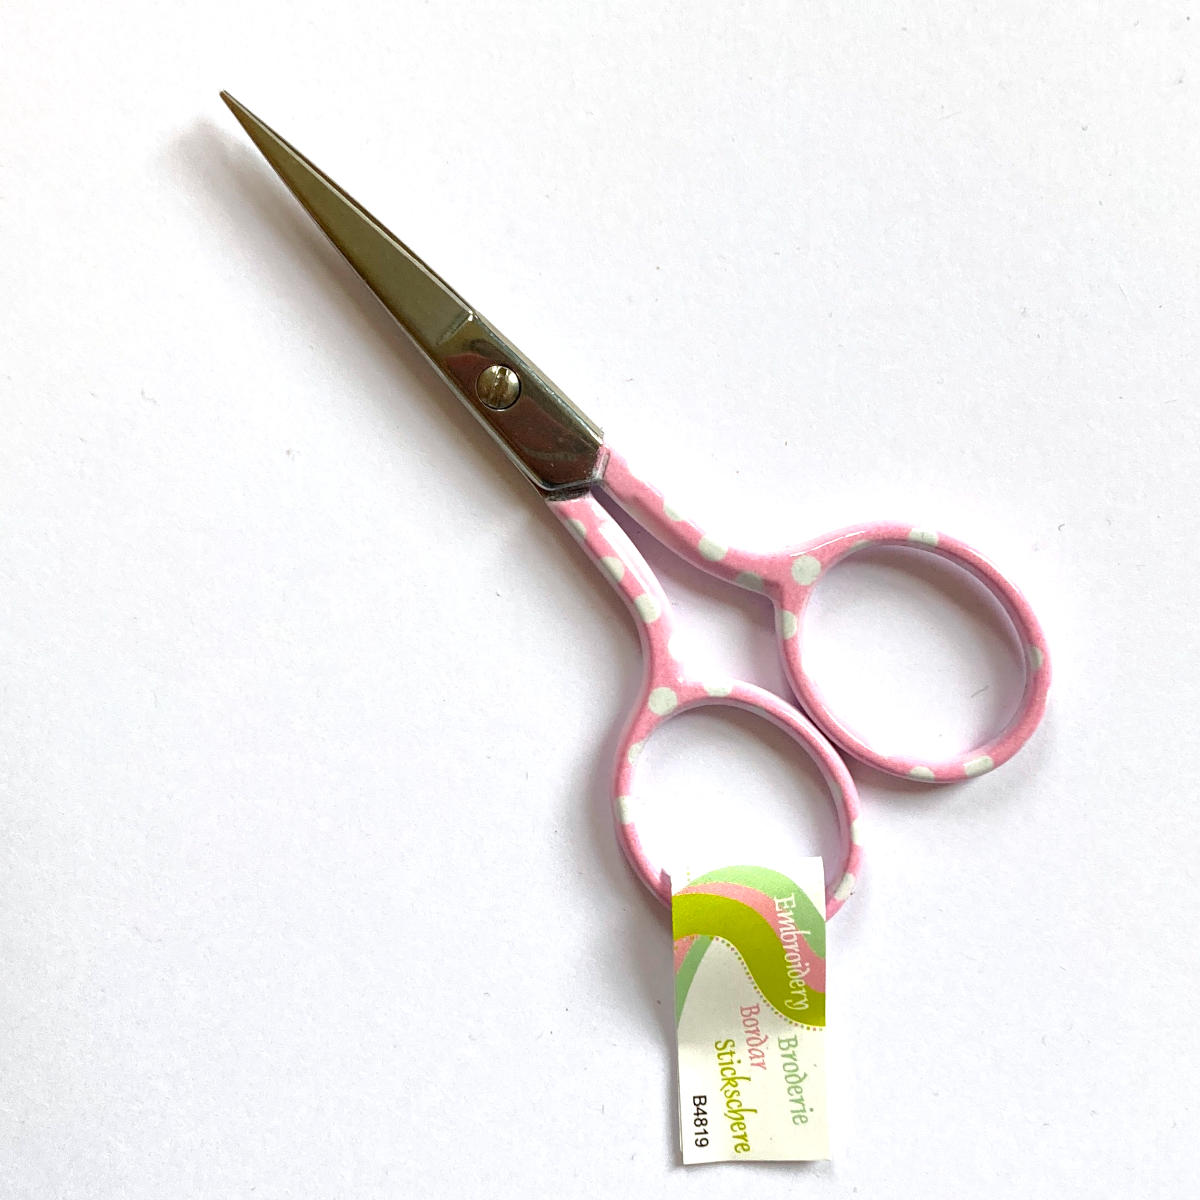 Pink polka dot embroidery scissors